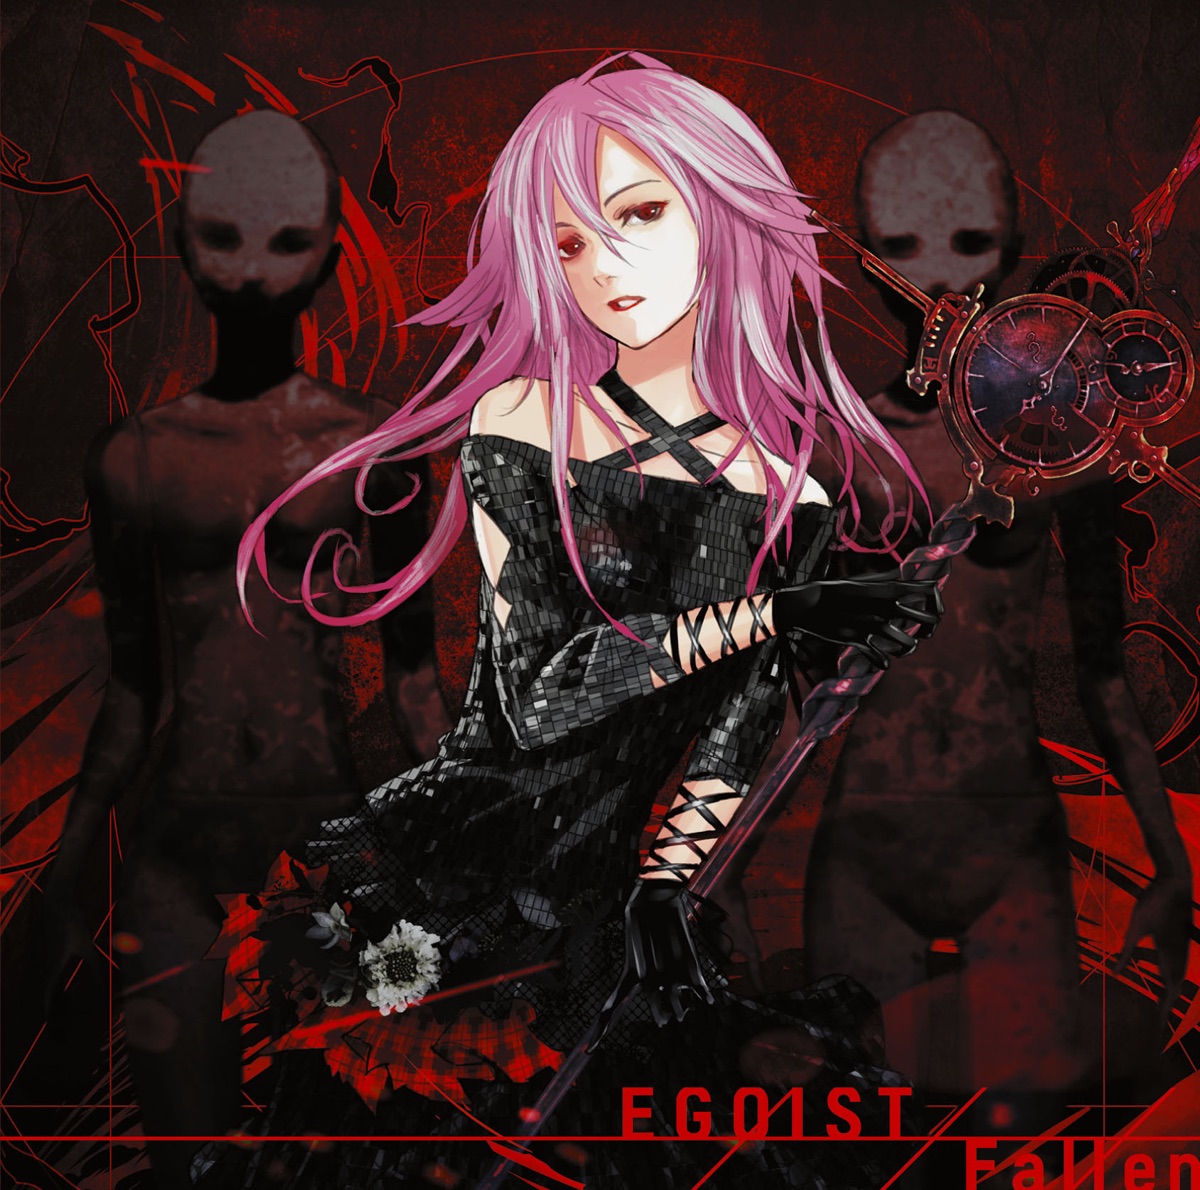 Cover for『EGOIST - Fallen』from the release『Fallen』